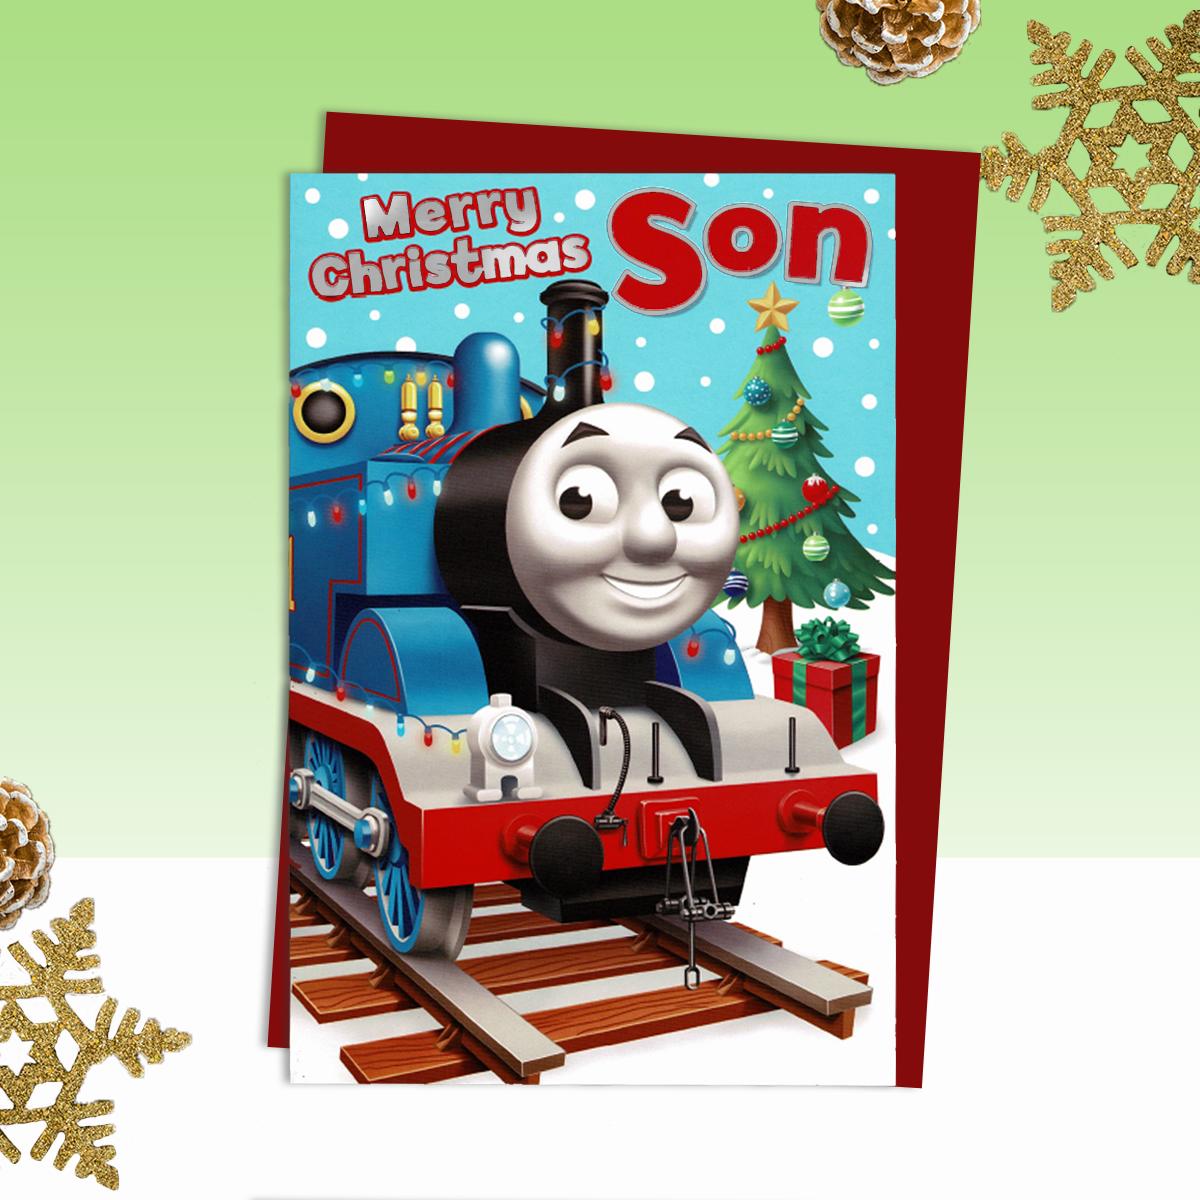 Son Thomas Christmas Card Alongside Its Red Envelope